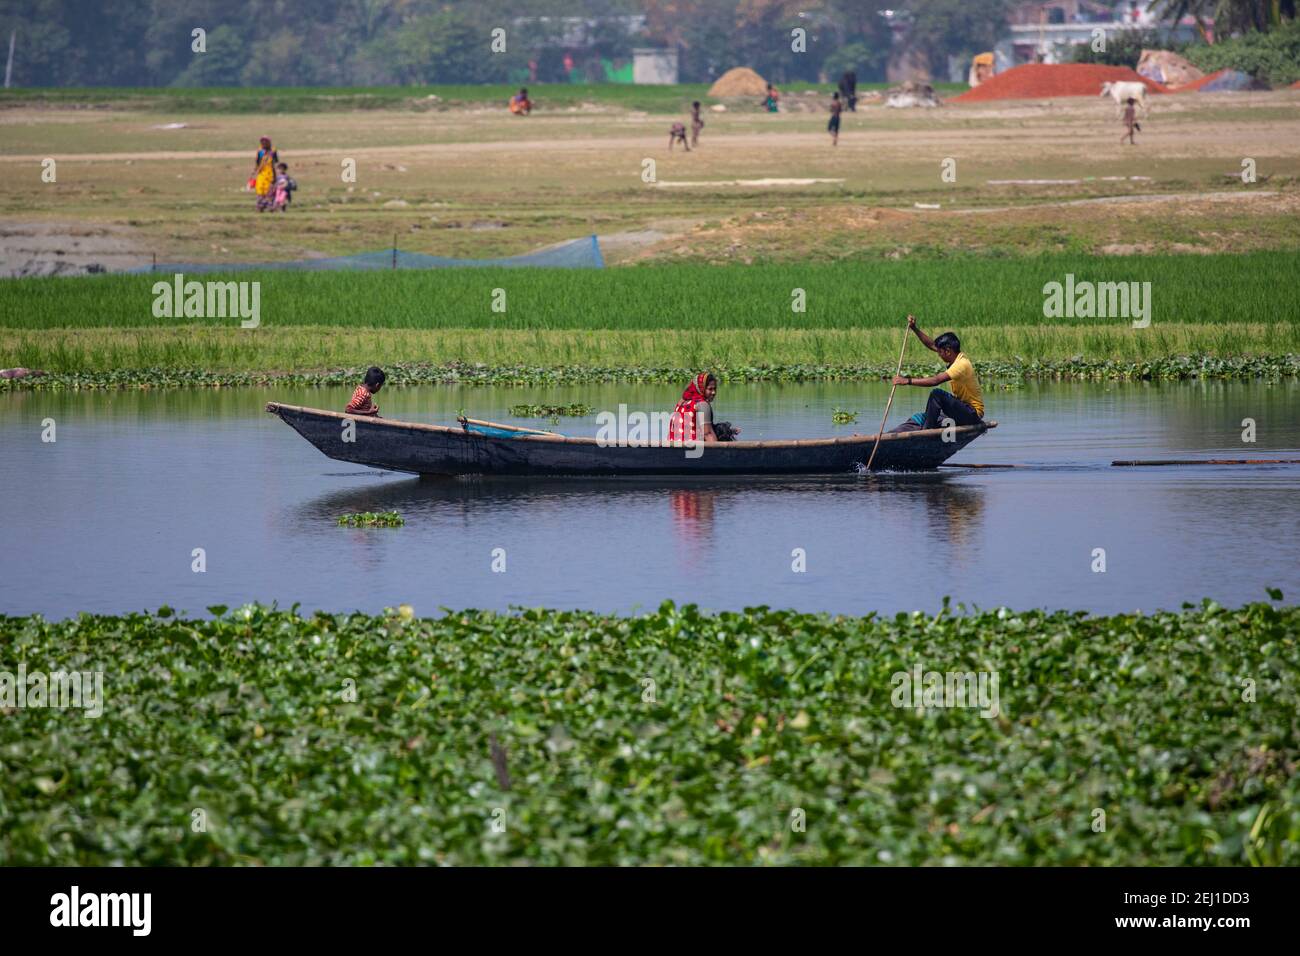 A man rowing boat in the Titas River at Brahmanbaria, Bangladesh Stock Photo